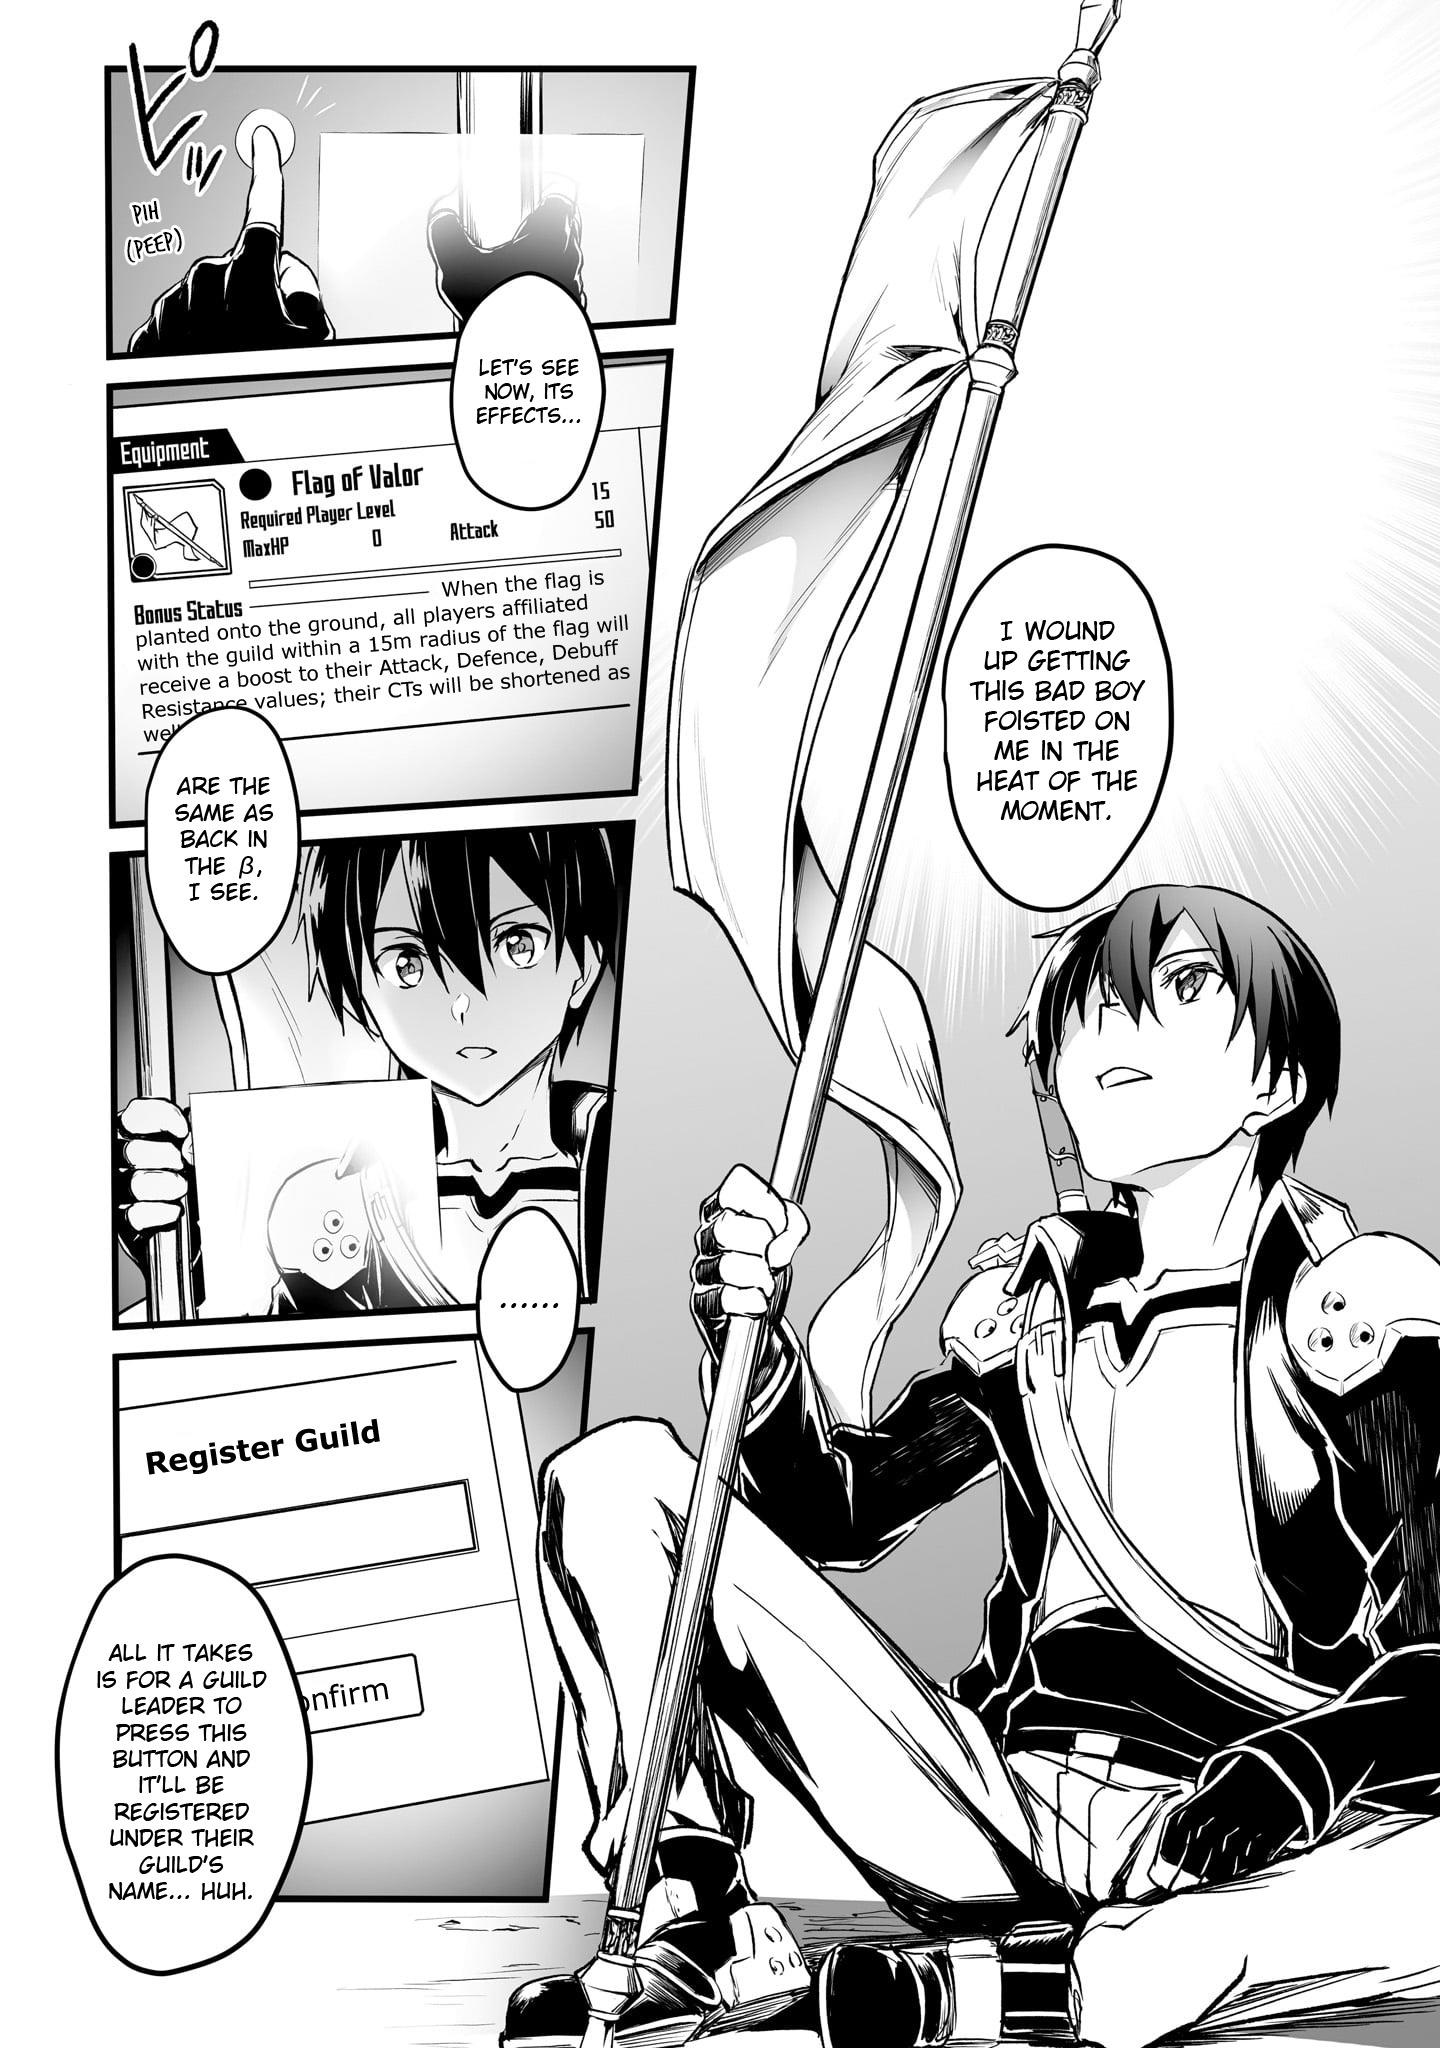 Read Sword Art Online: Progressive - Kuraki Yuuyami No Scherzo Vol